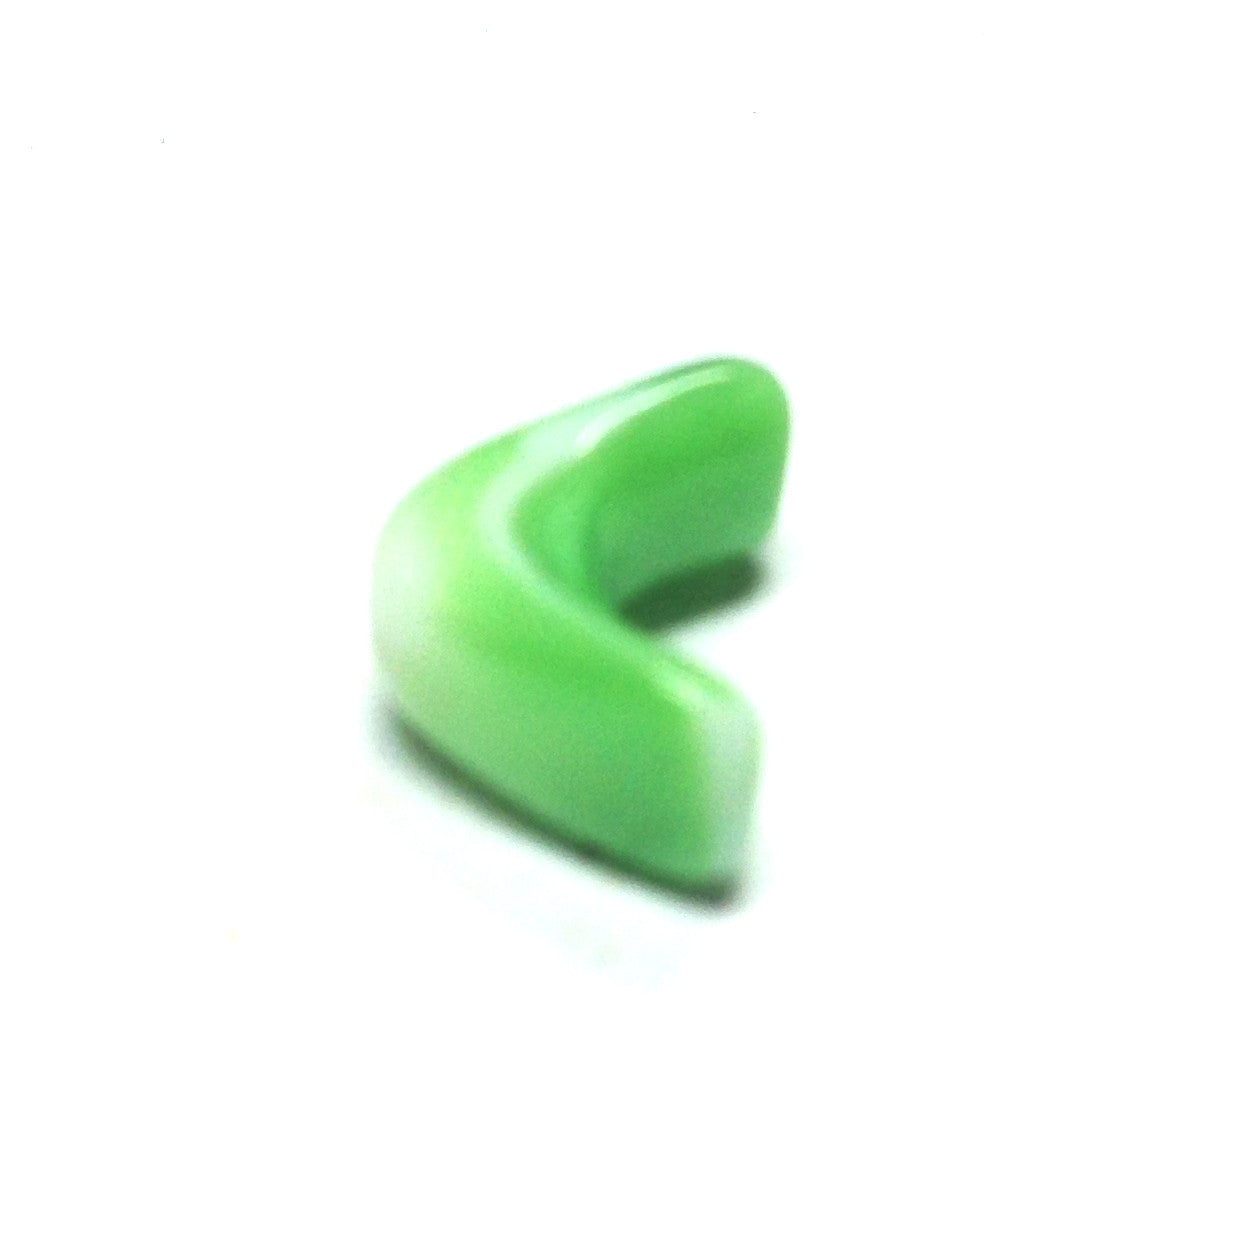 11MM Green/White Glass Interlock Bead (72 pieces)